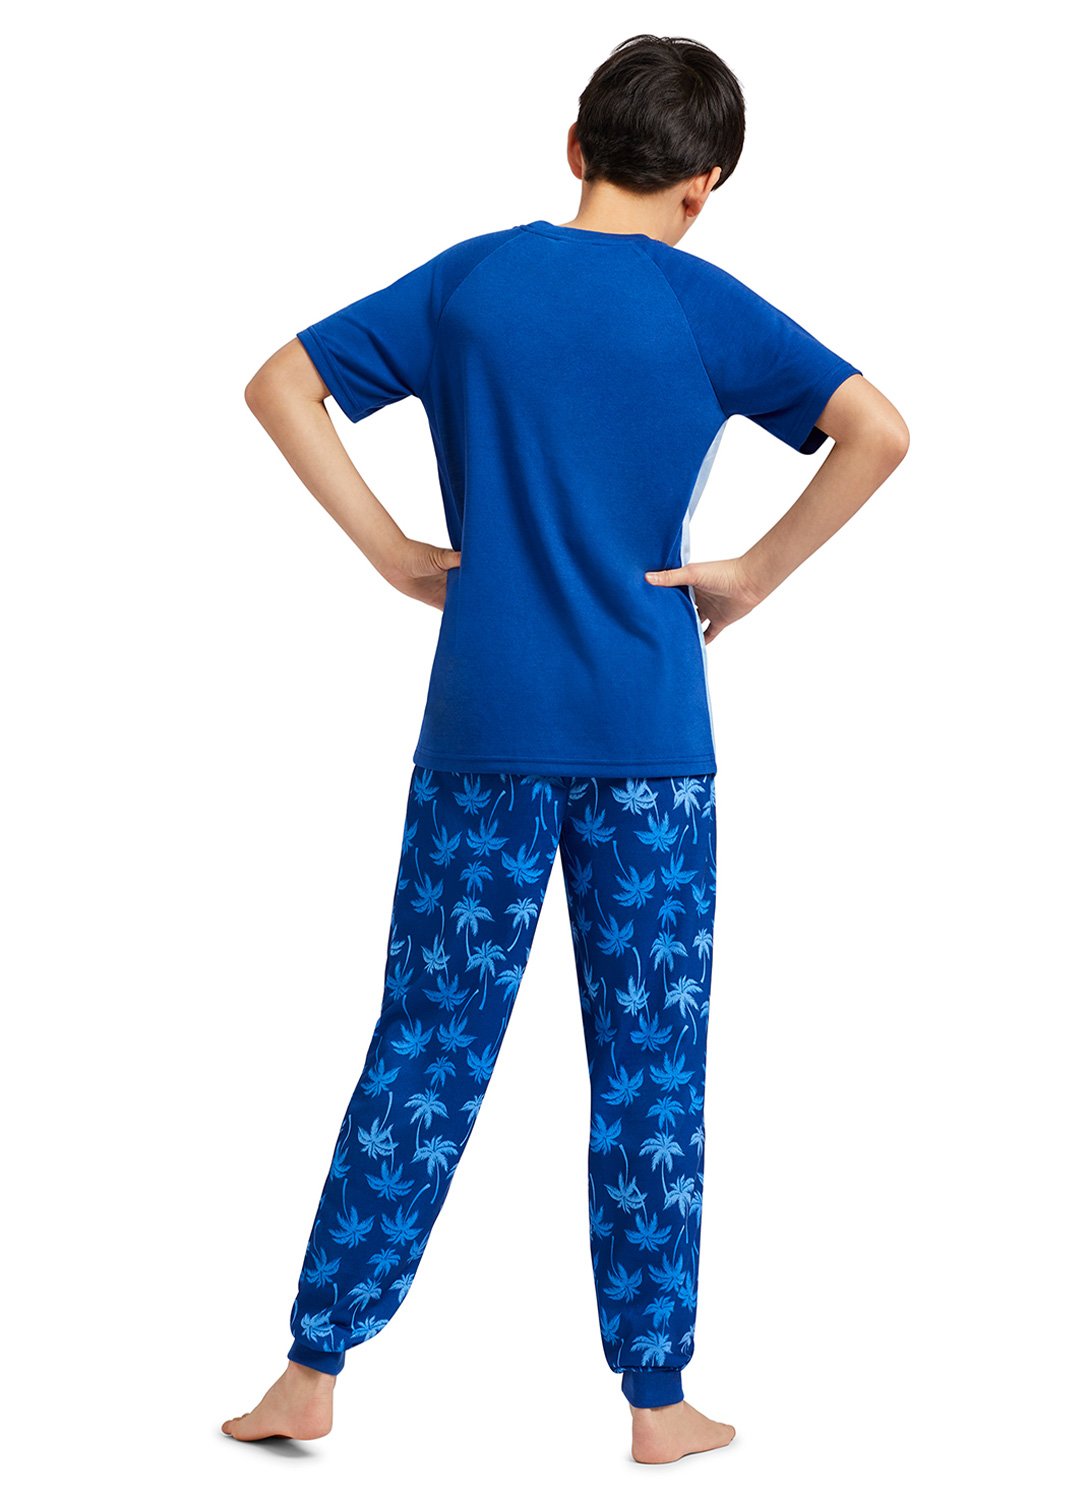 Back Boy with palm print pants on 2-Piece Pajama Set